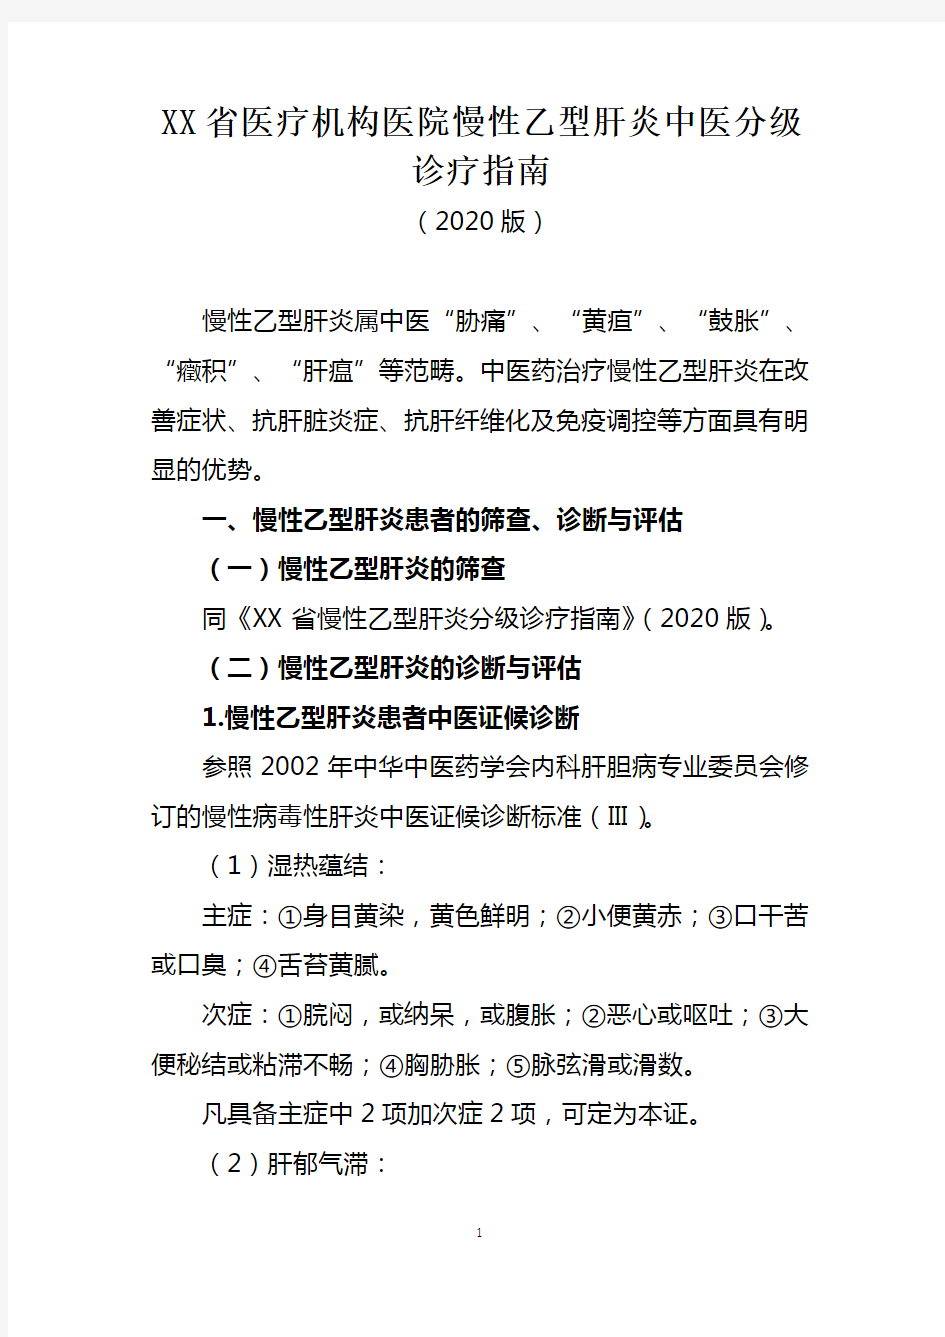 XX省医疗机构医院慢性乙型肝炎中医分级诊疗指南(2020年版)